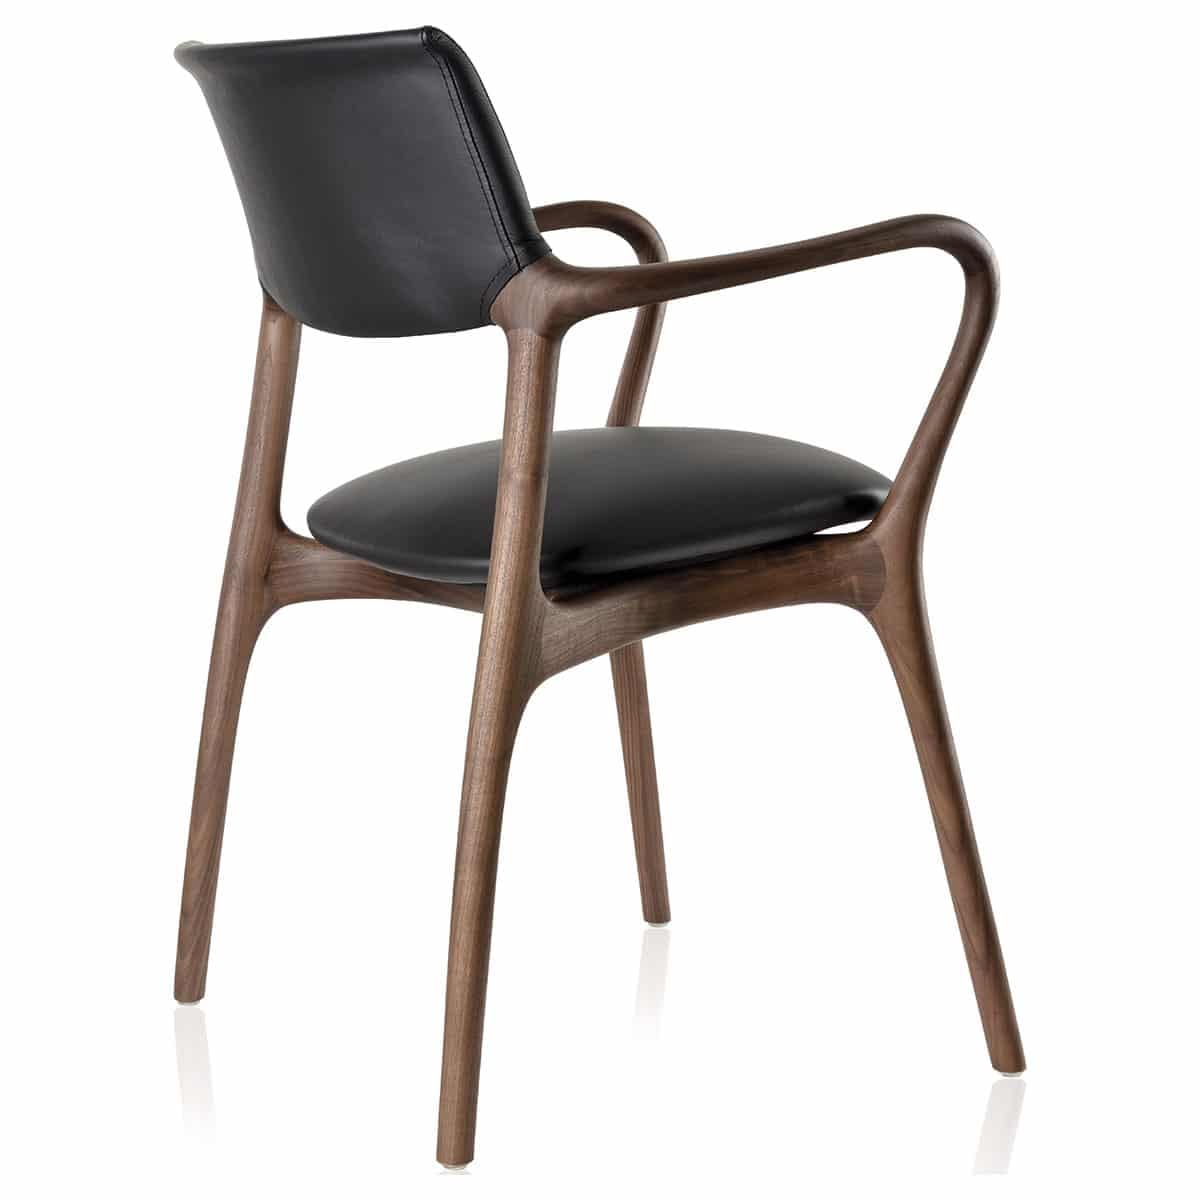 Designer Jader Almeidal Design Bell Chair